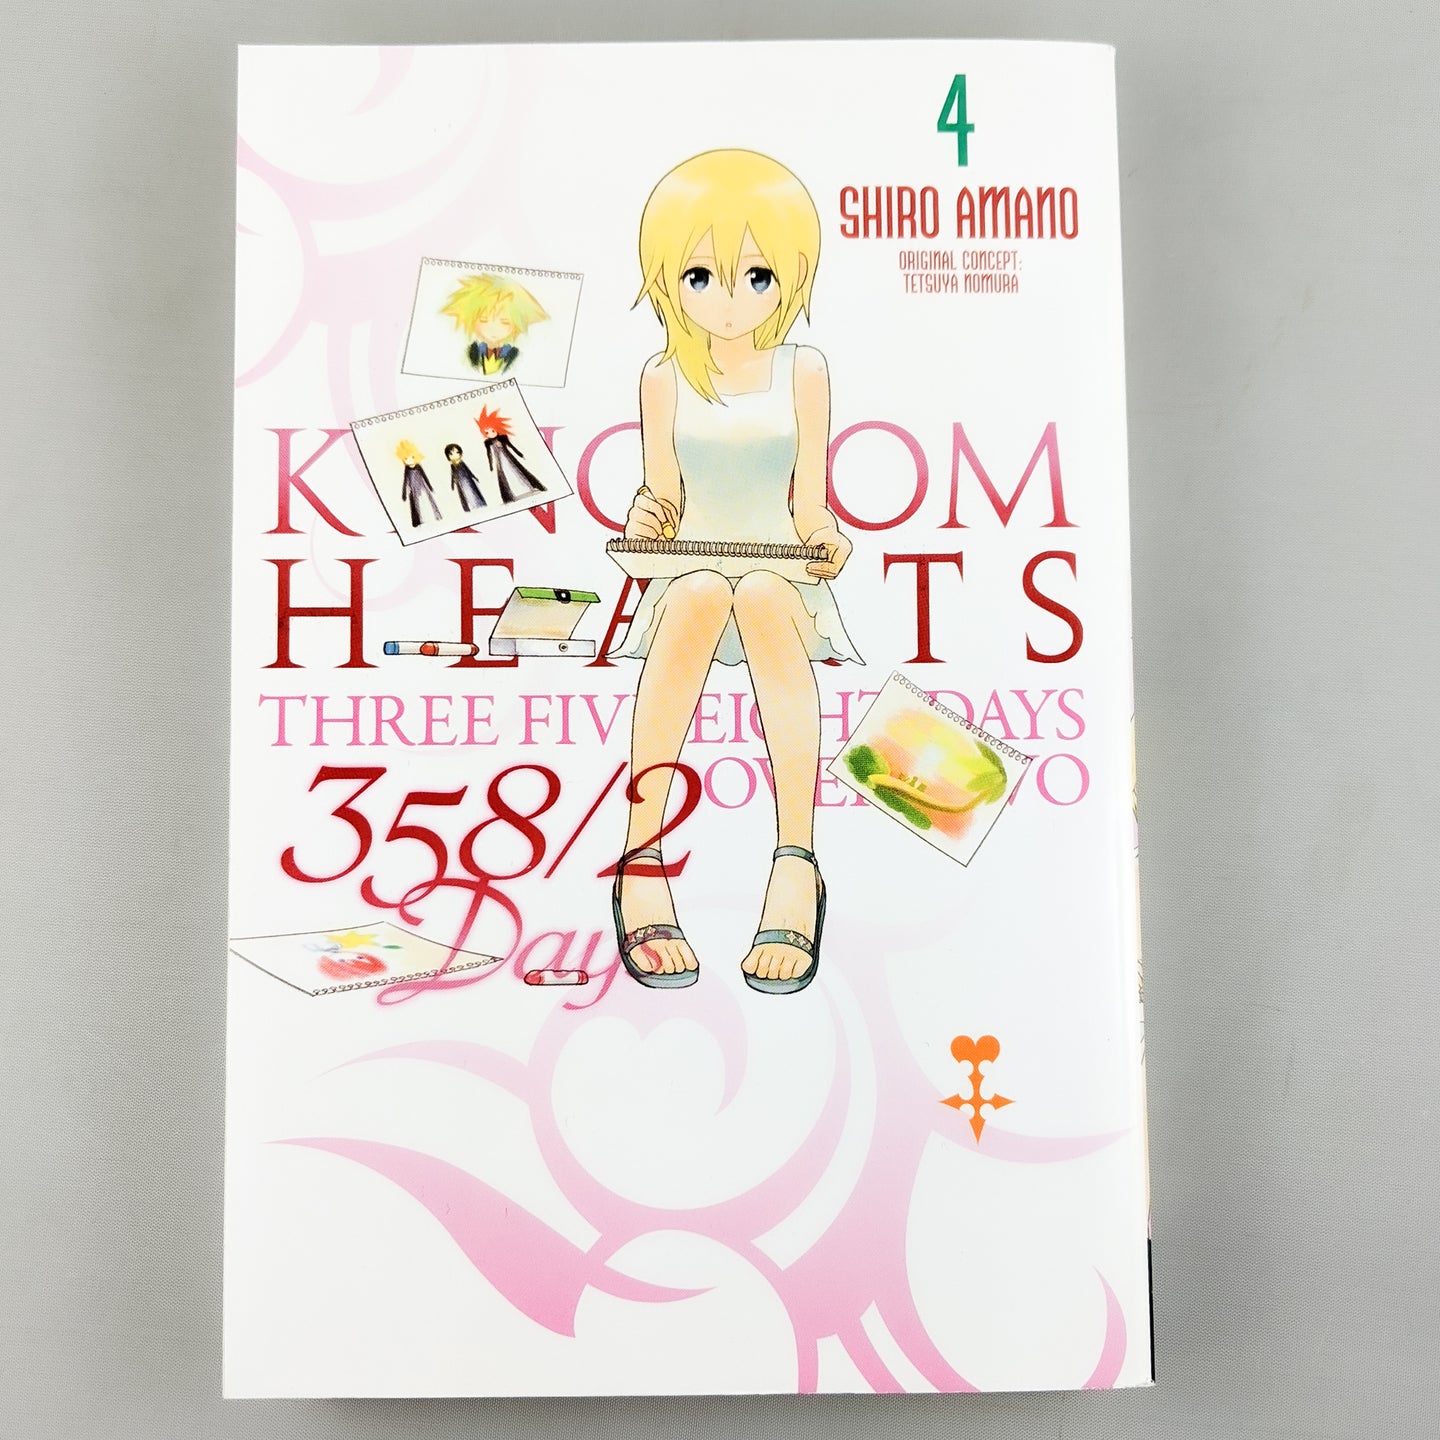 Kingdom Hearts 358/2 Days Manga volume 4. Manga by Shiro Amano.